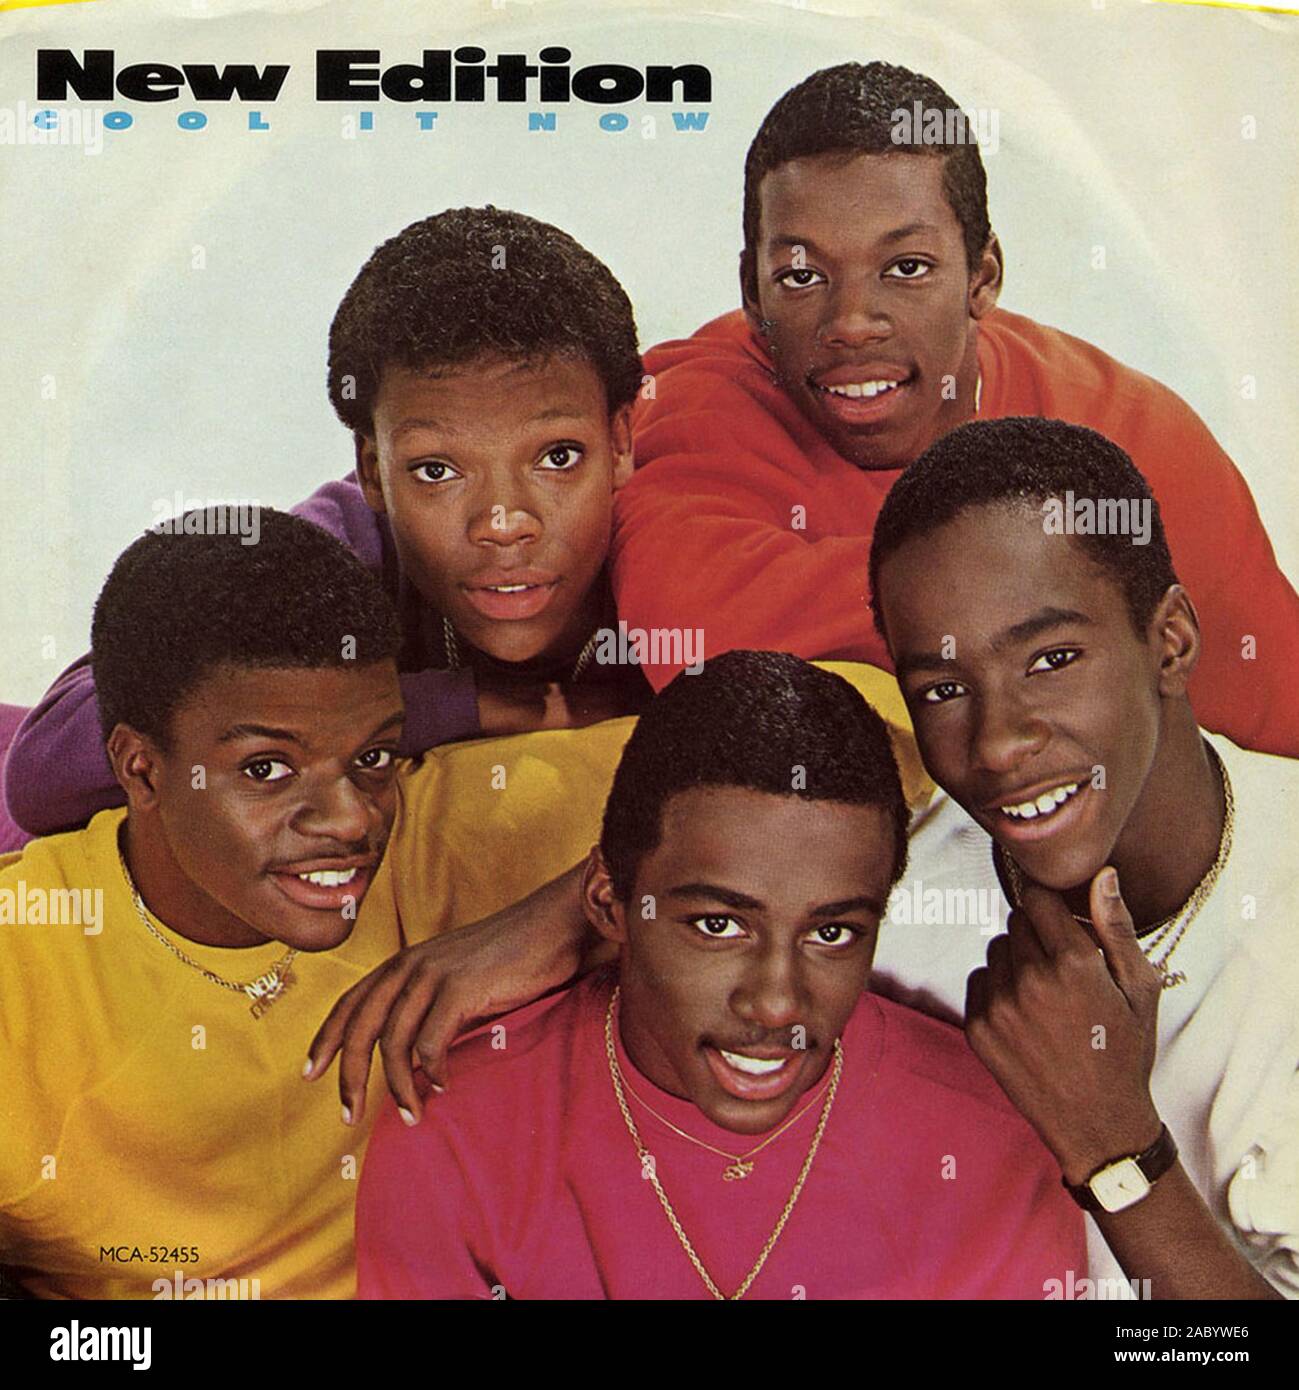 New Edition - Cool It Now   - Vintage vinyl album cover Stock Photo